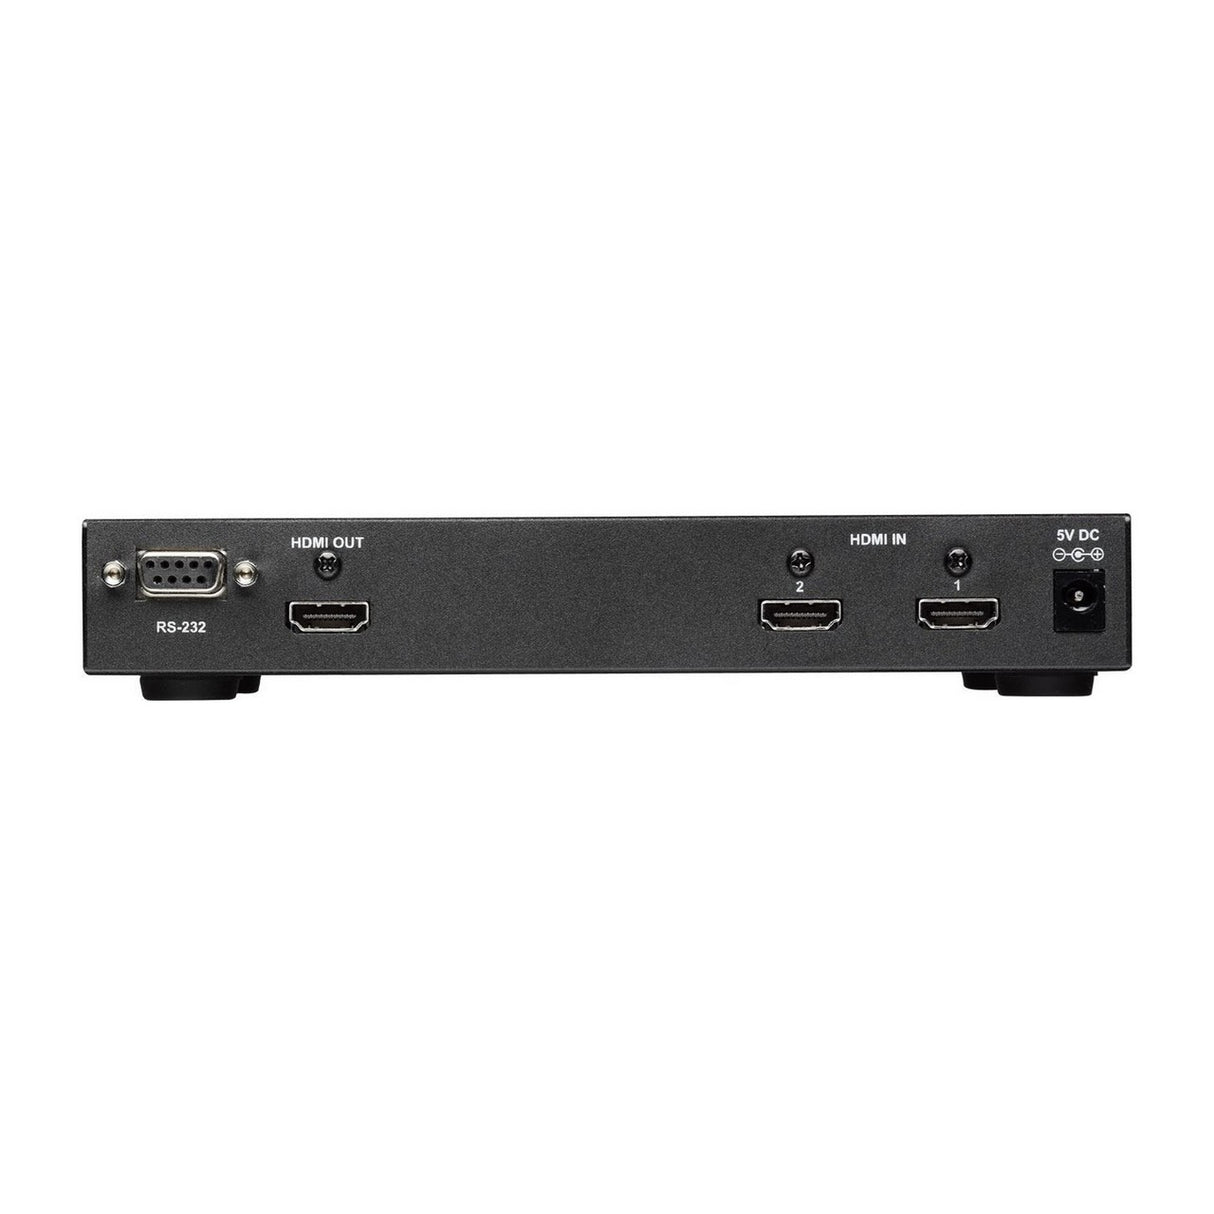 tvONE 1T-SX-632 2 x 1 HDMI Switcher